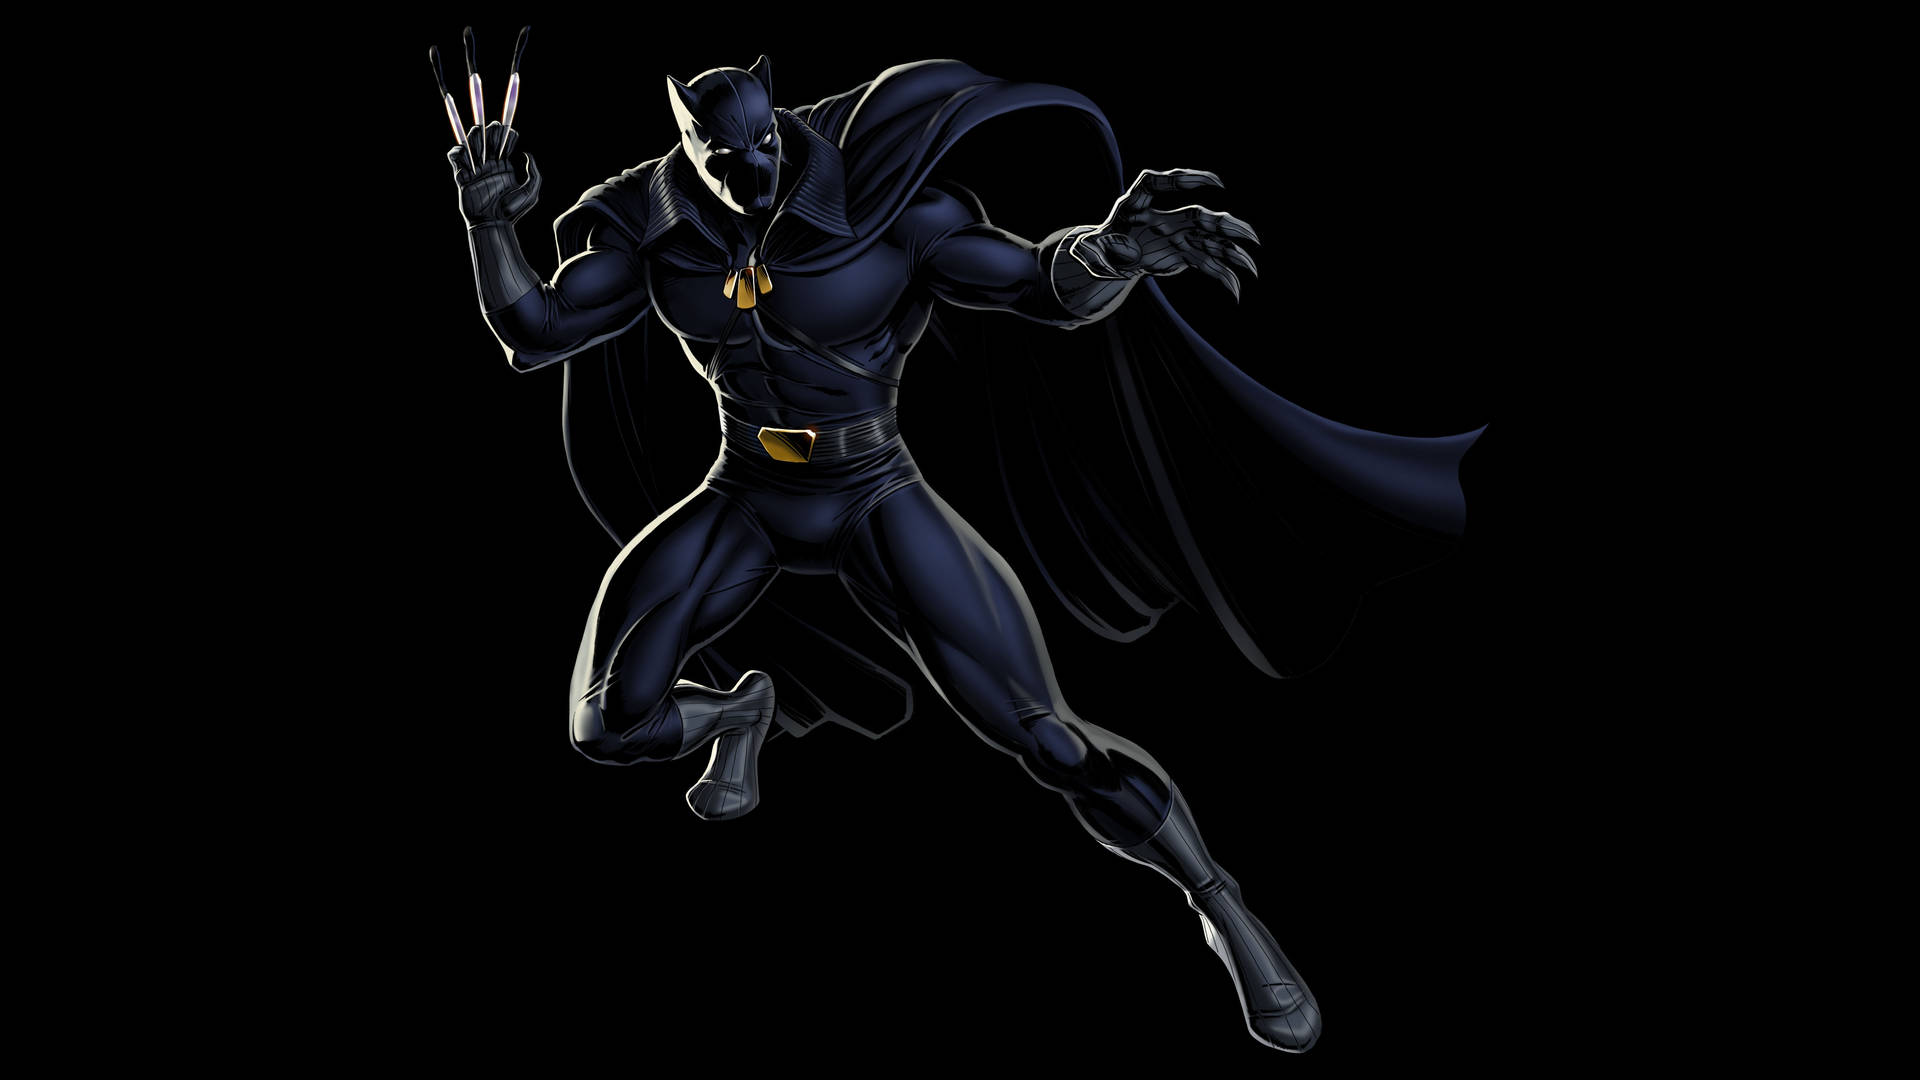 Black Panther 4k Ultra Hd Dark Art Picture